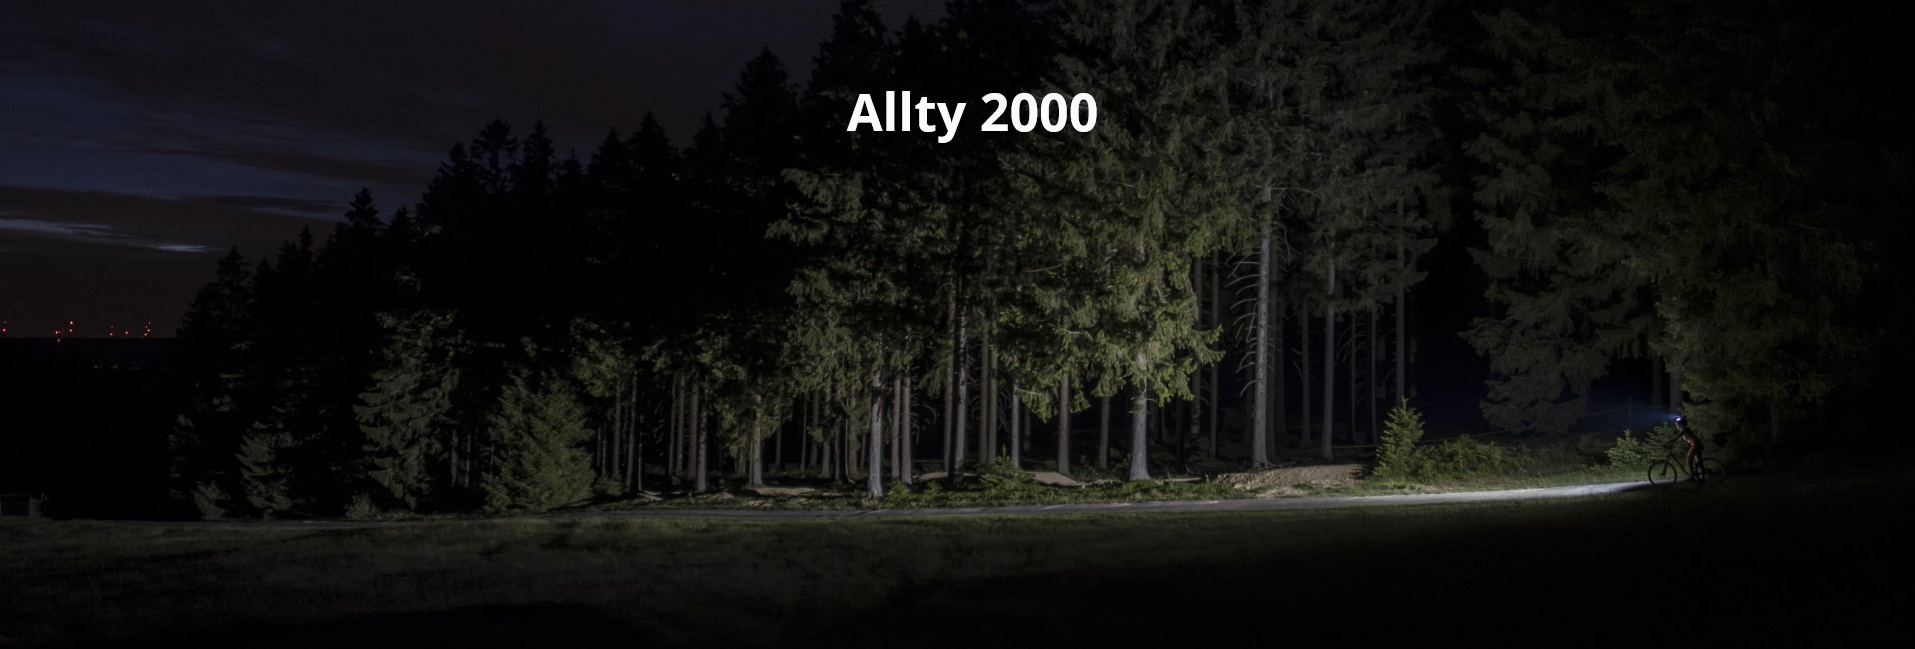 Magicshine Helmlampe Allty 2000 mit Radfahrer im Wald